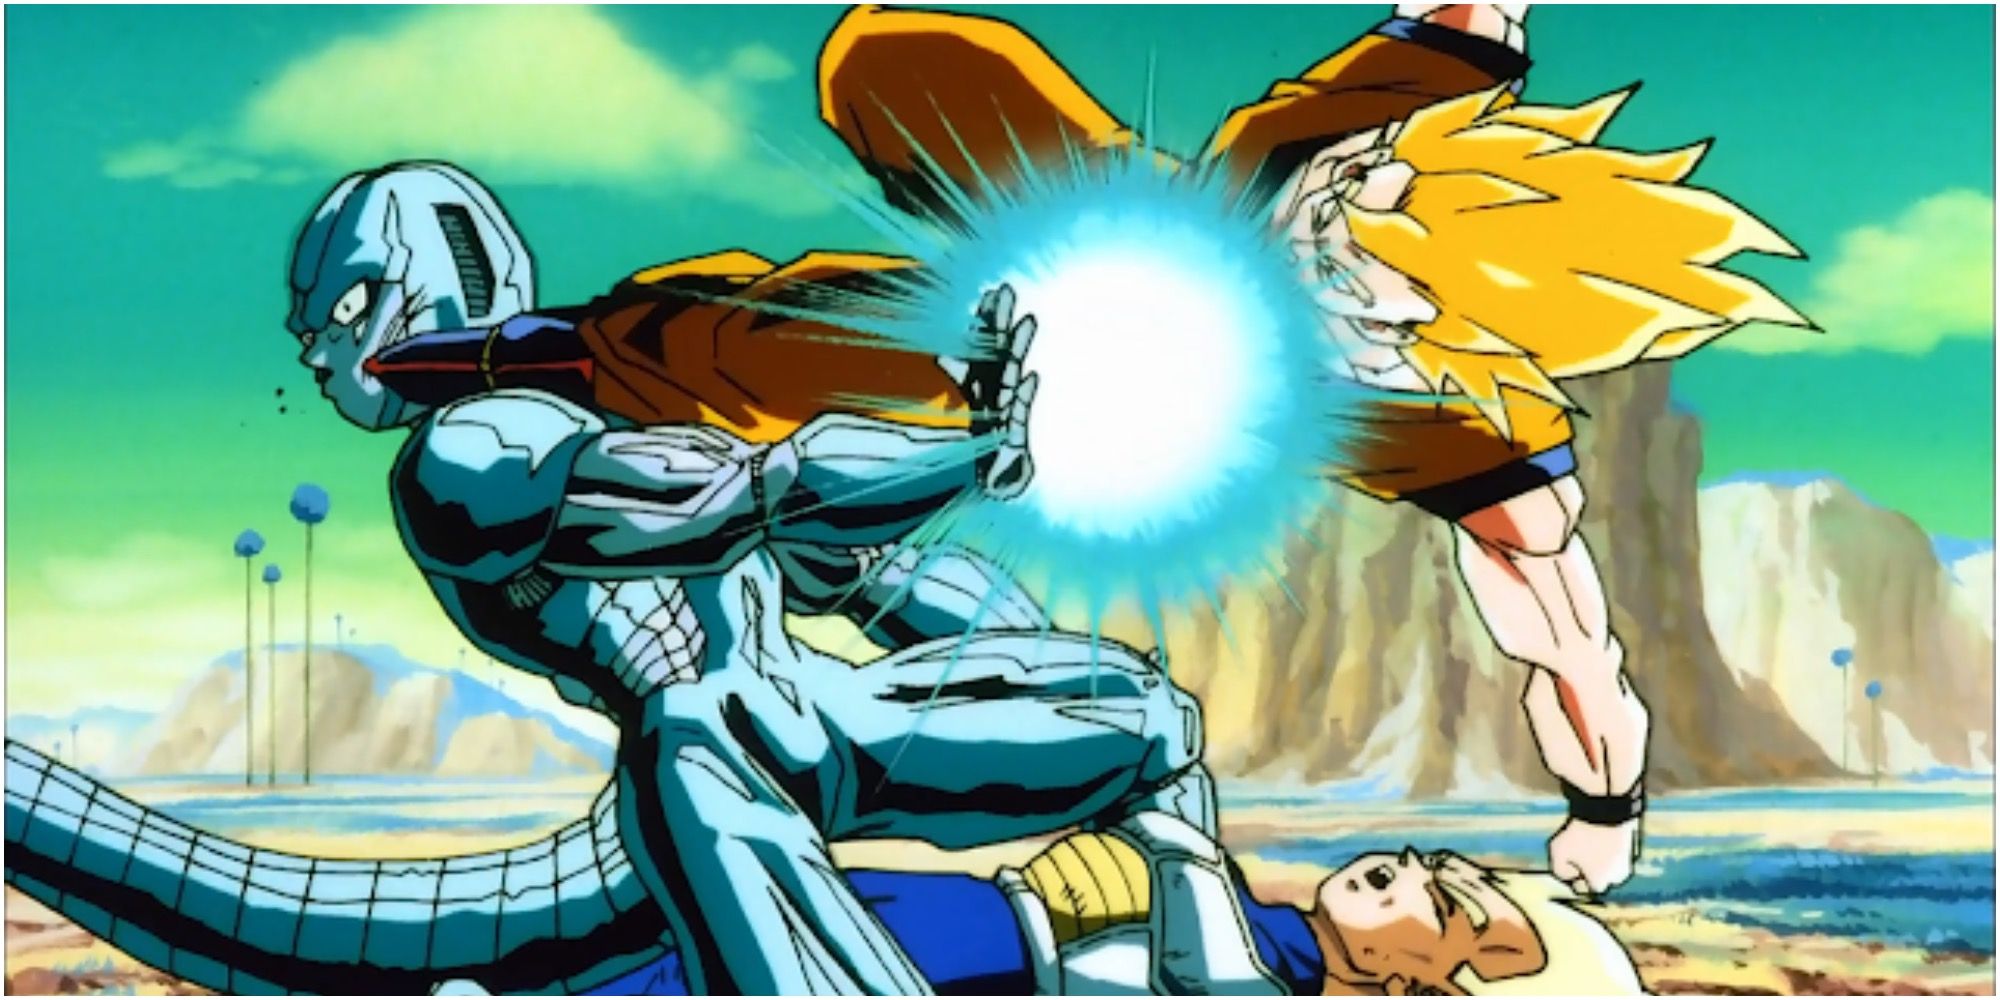 Goku and Vegeta vs Metal Cooler